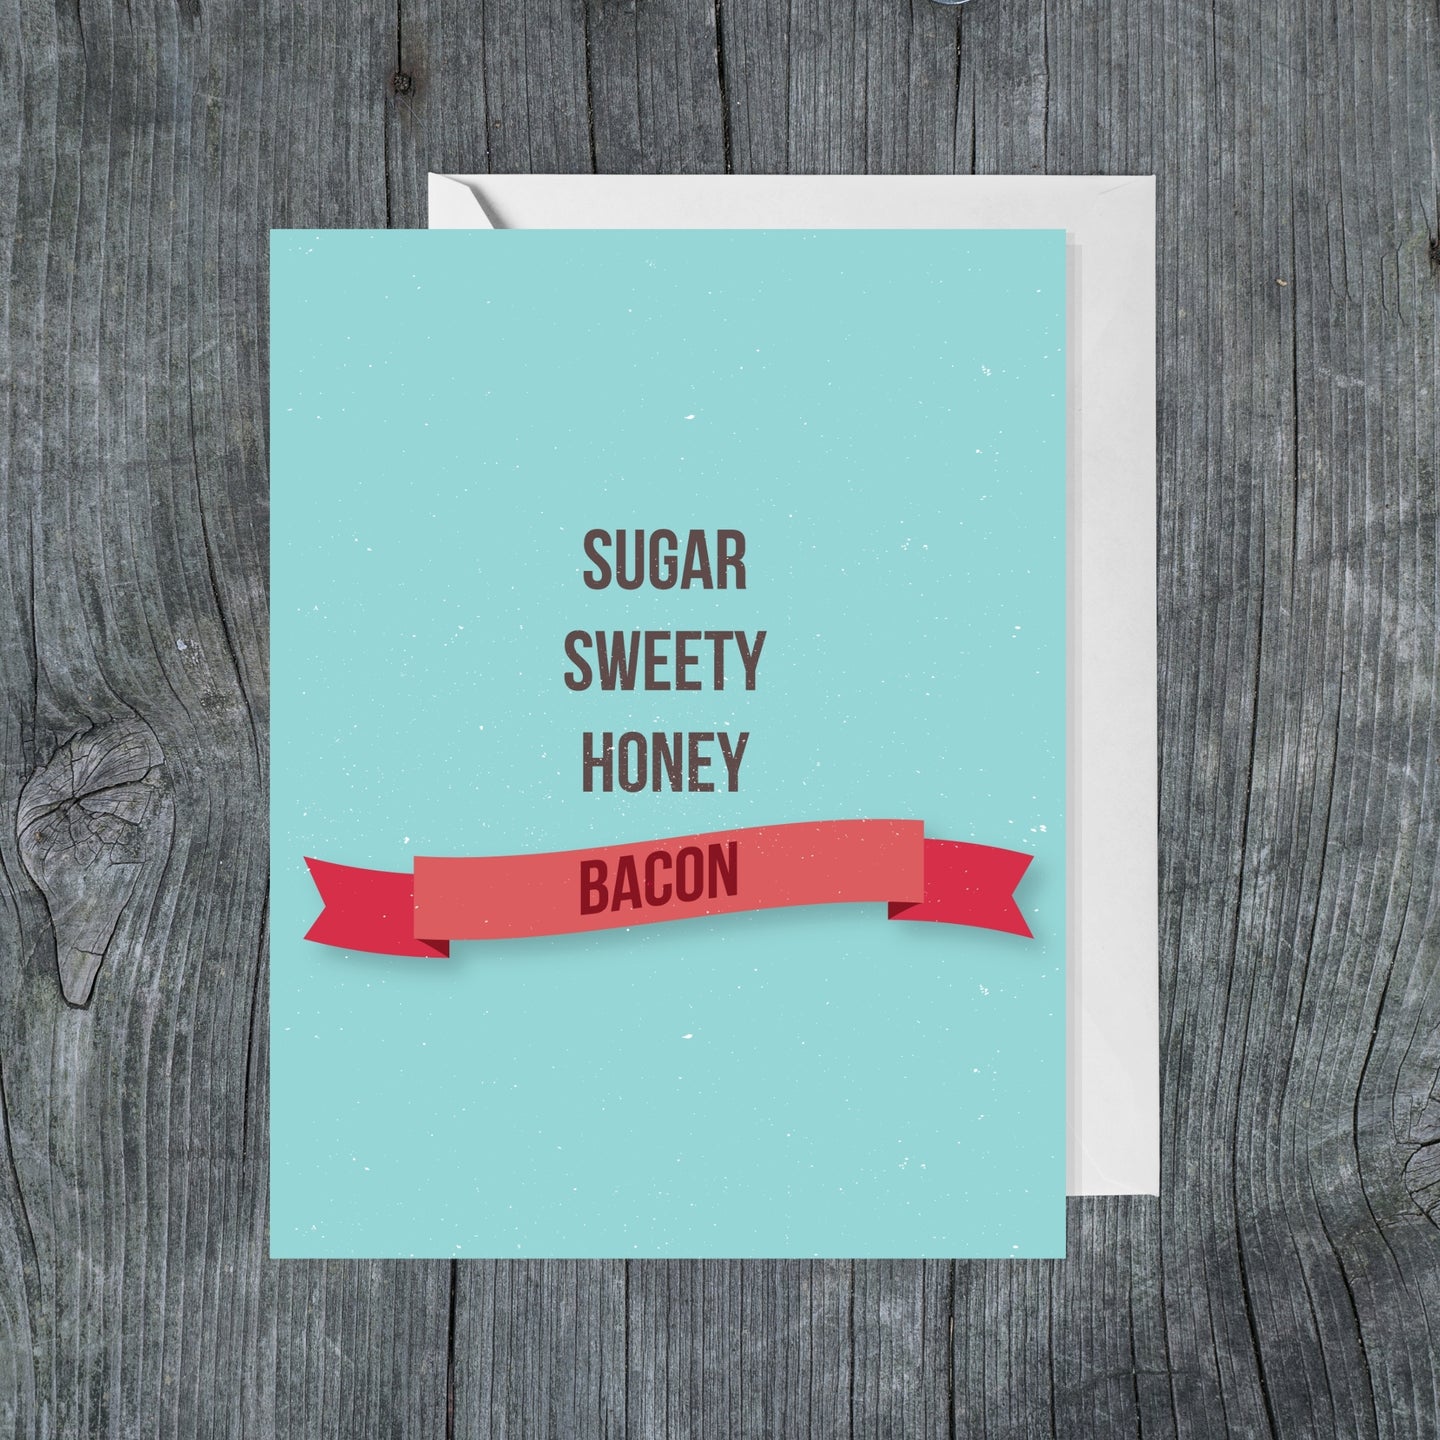 Sugar, Sweety, Honey, Bacon